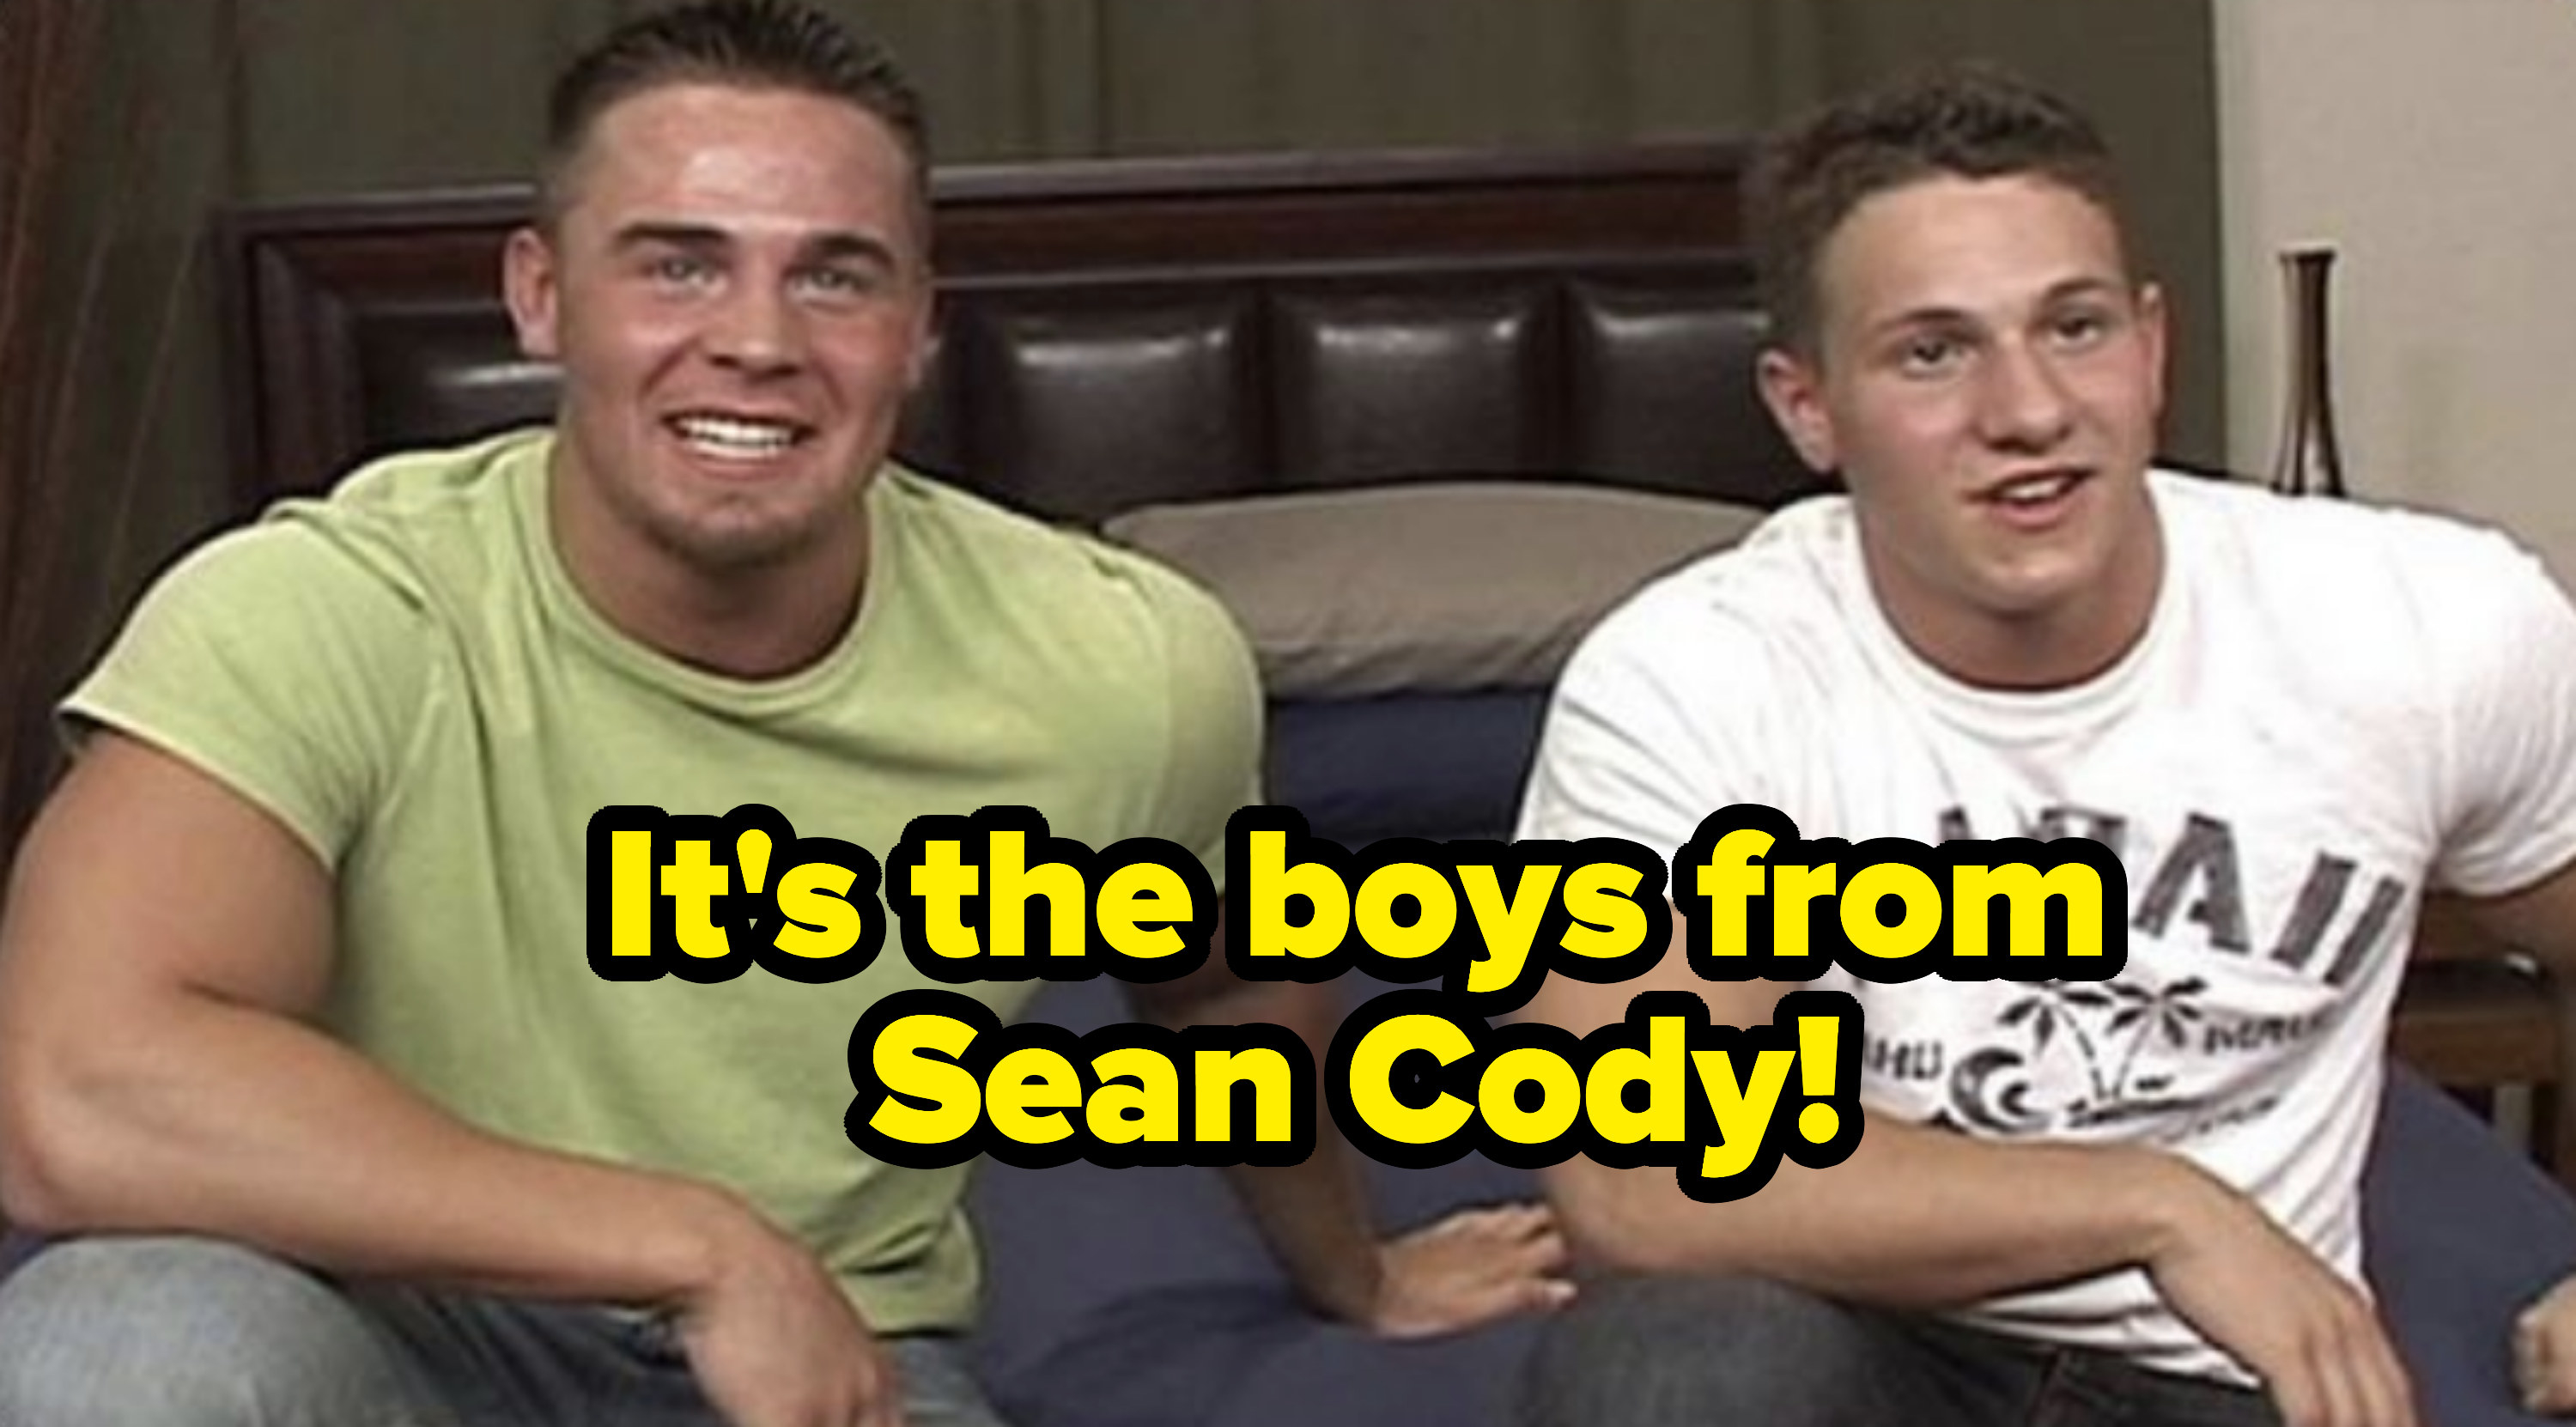 The boys from Sean Cody